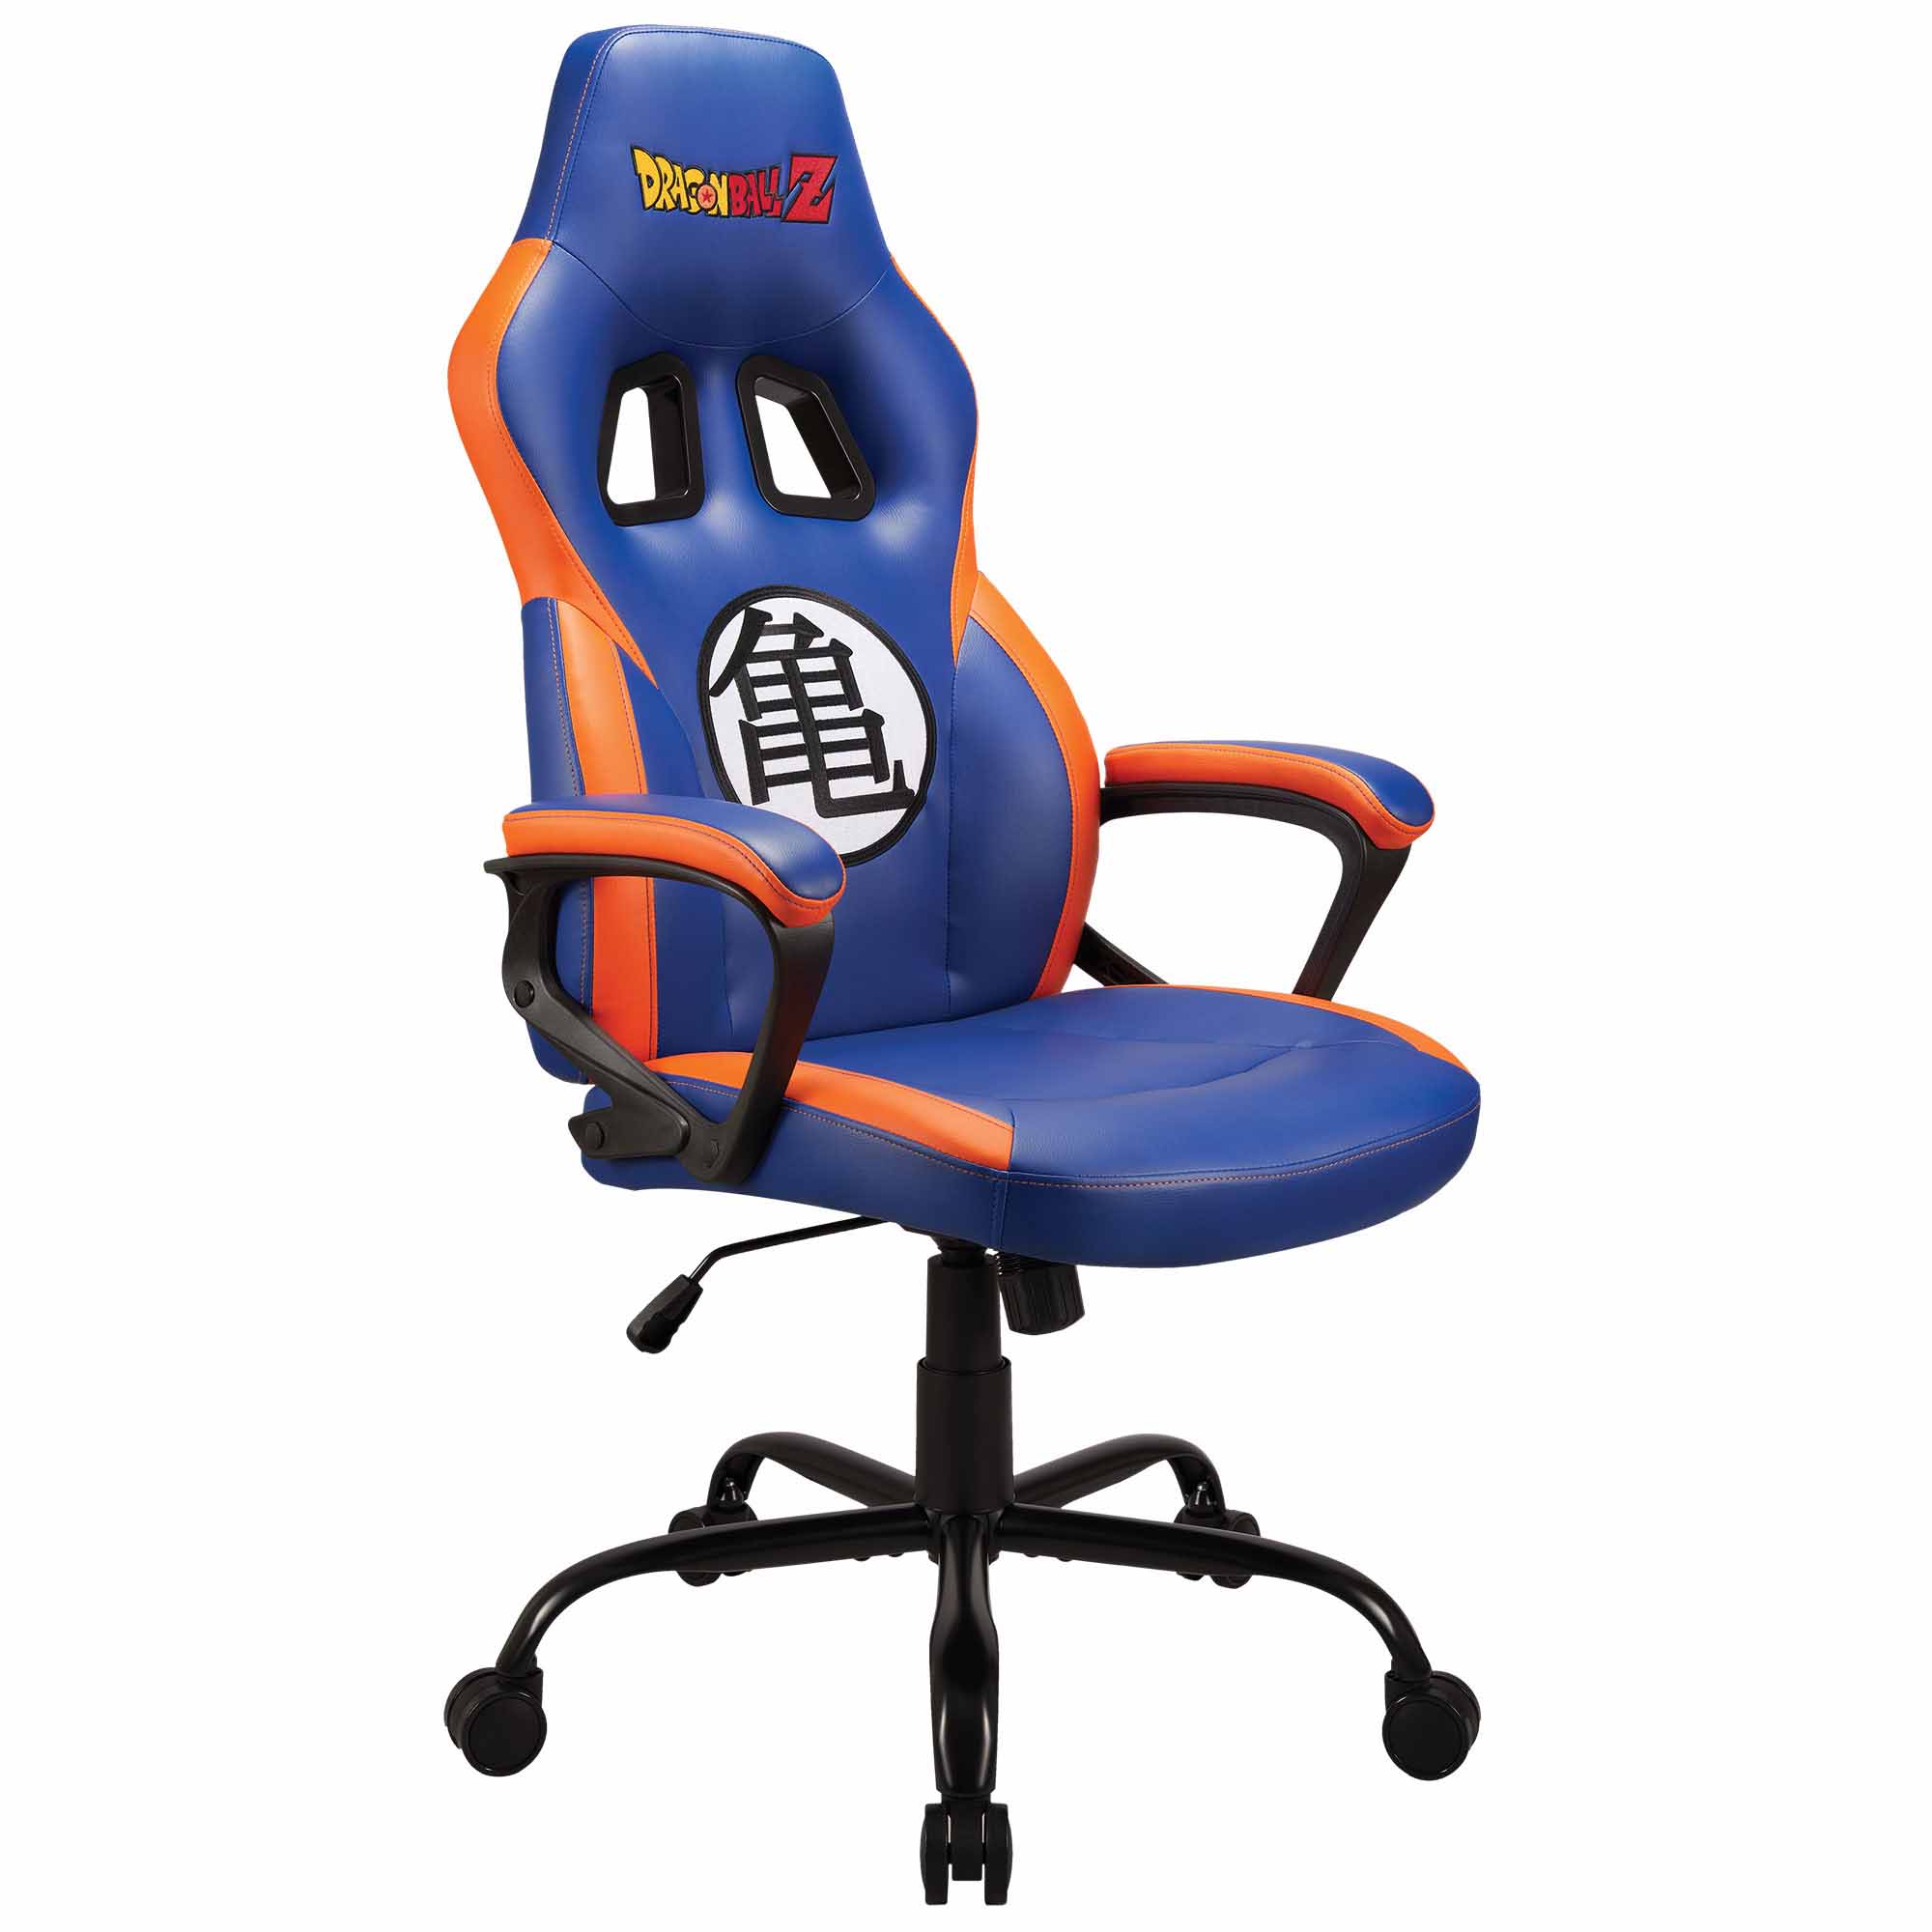 Dragon Ball Z gaming chair | Subsonic